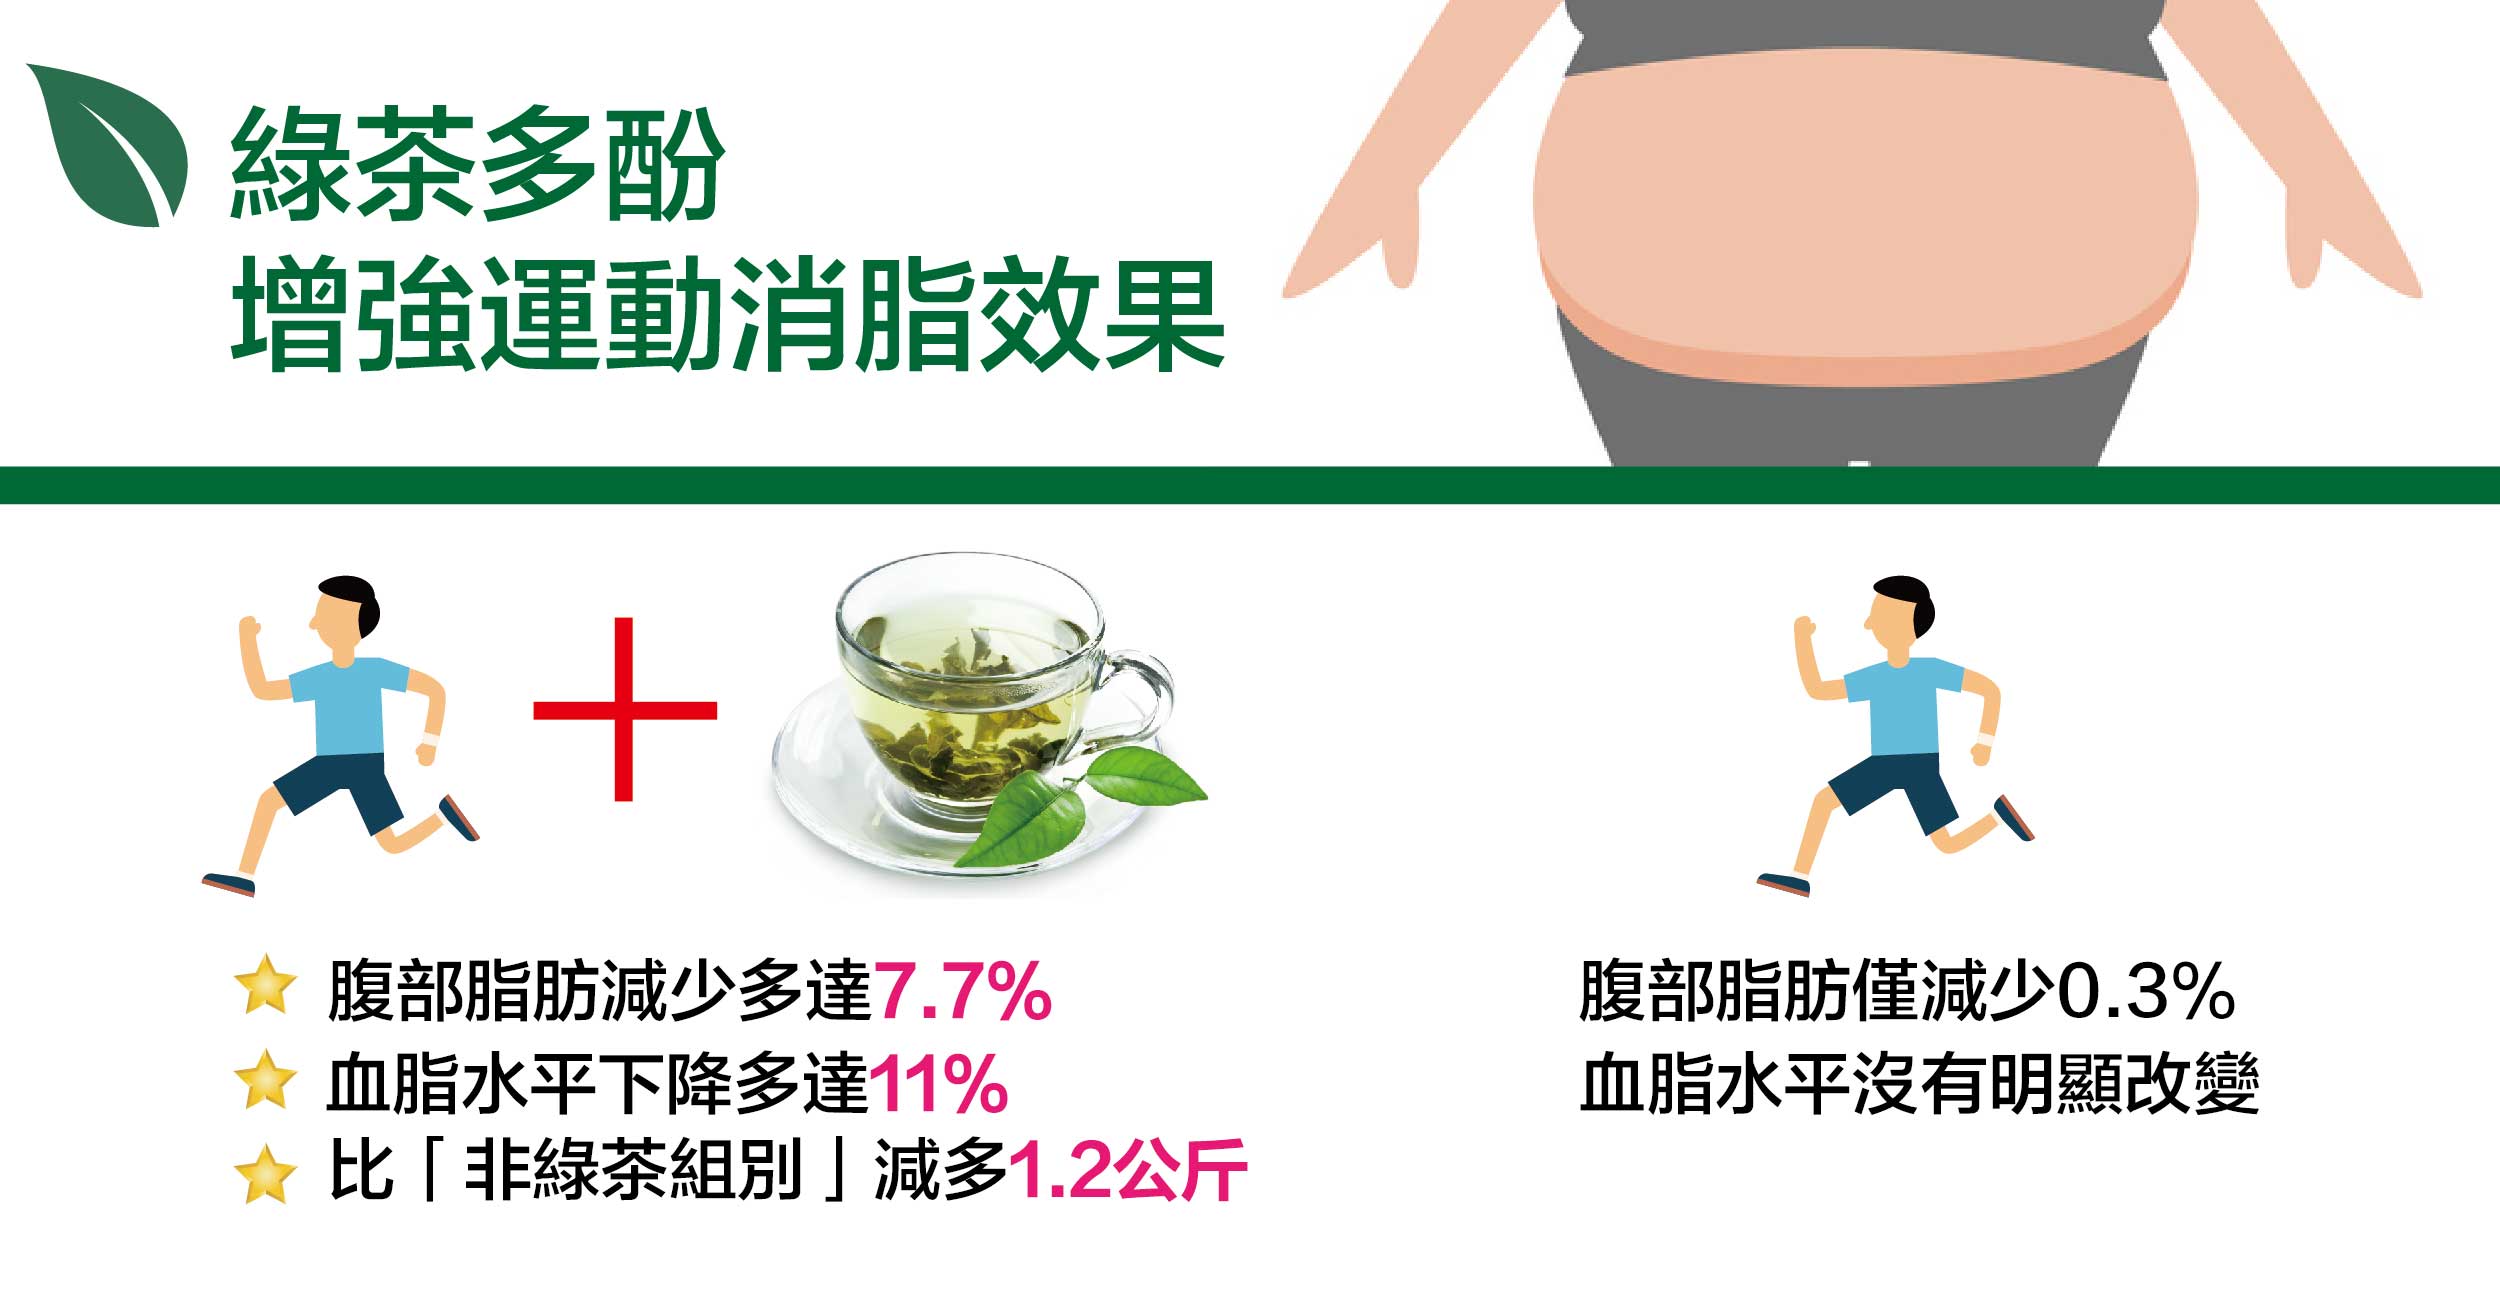 Green Tea Polyphenols boost fat burning